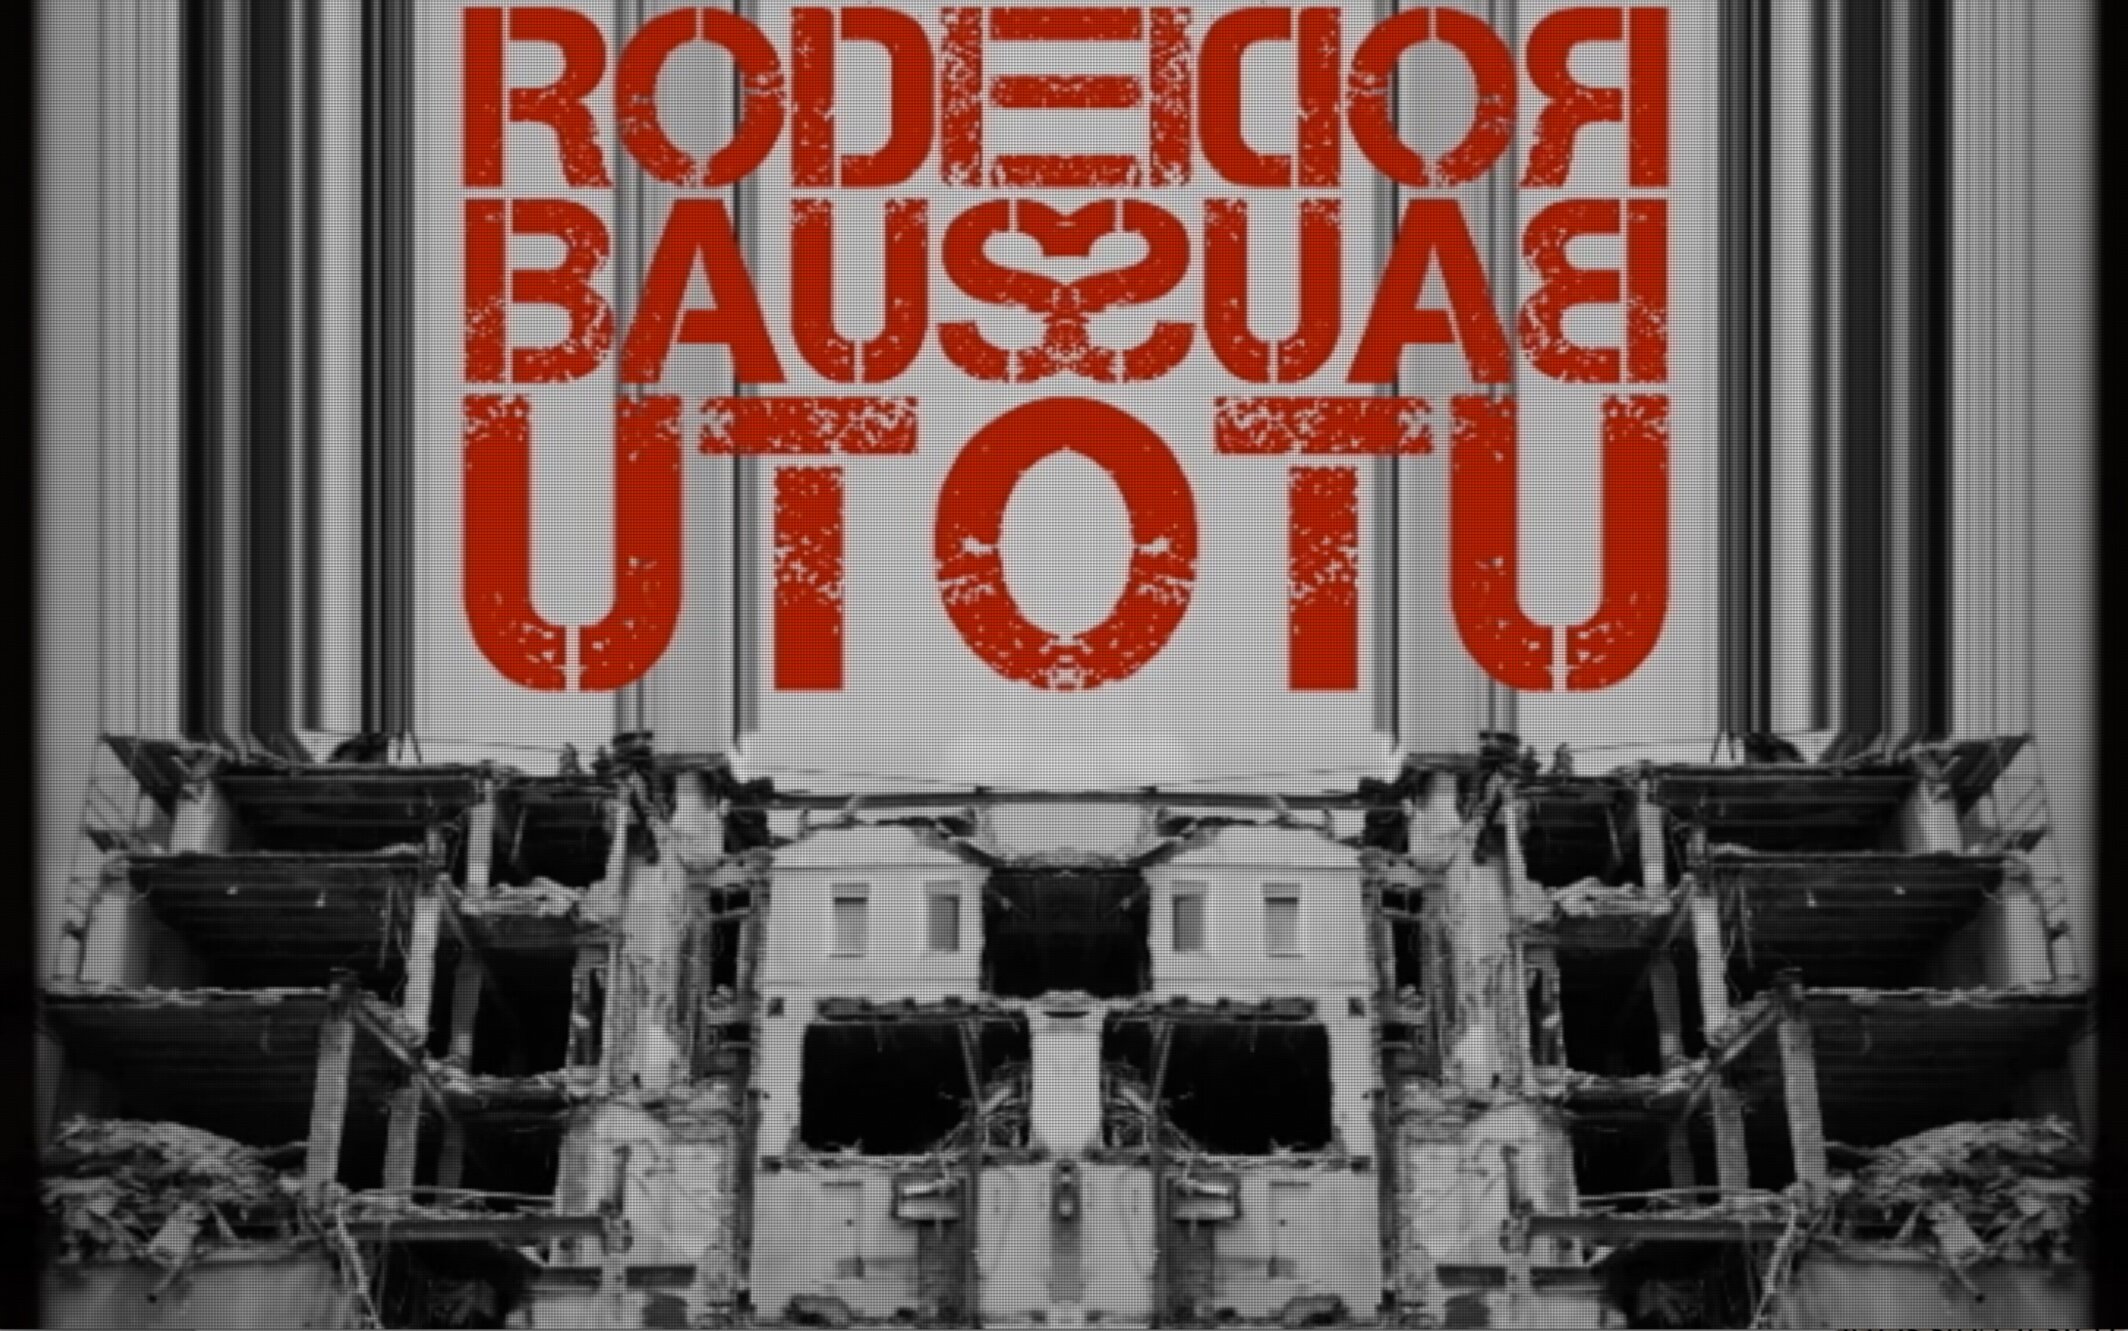 Rodeo Talkshow / Baustelle Utopia